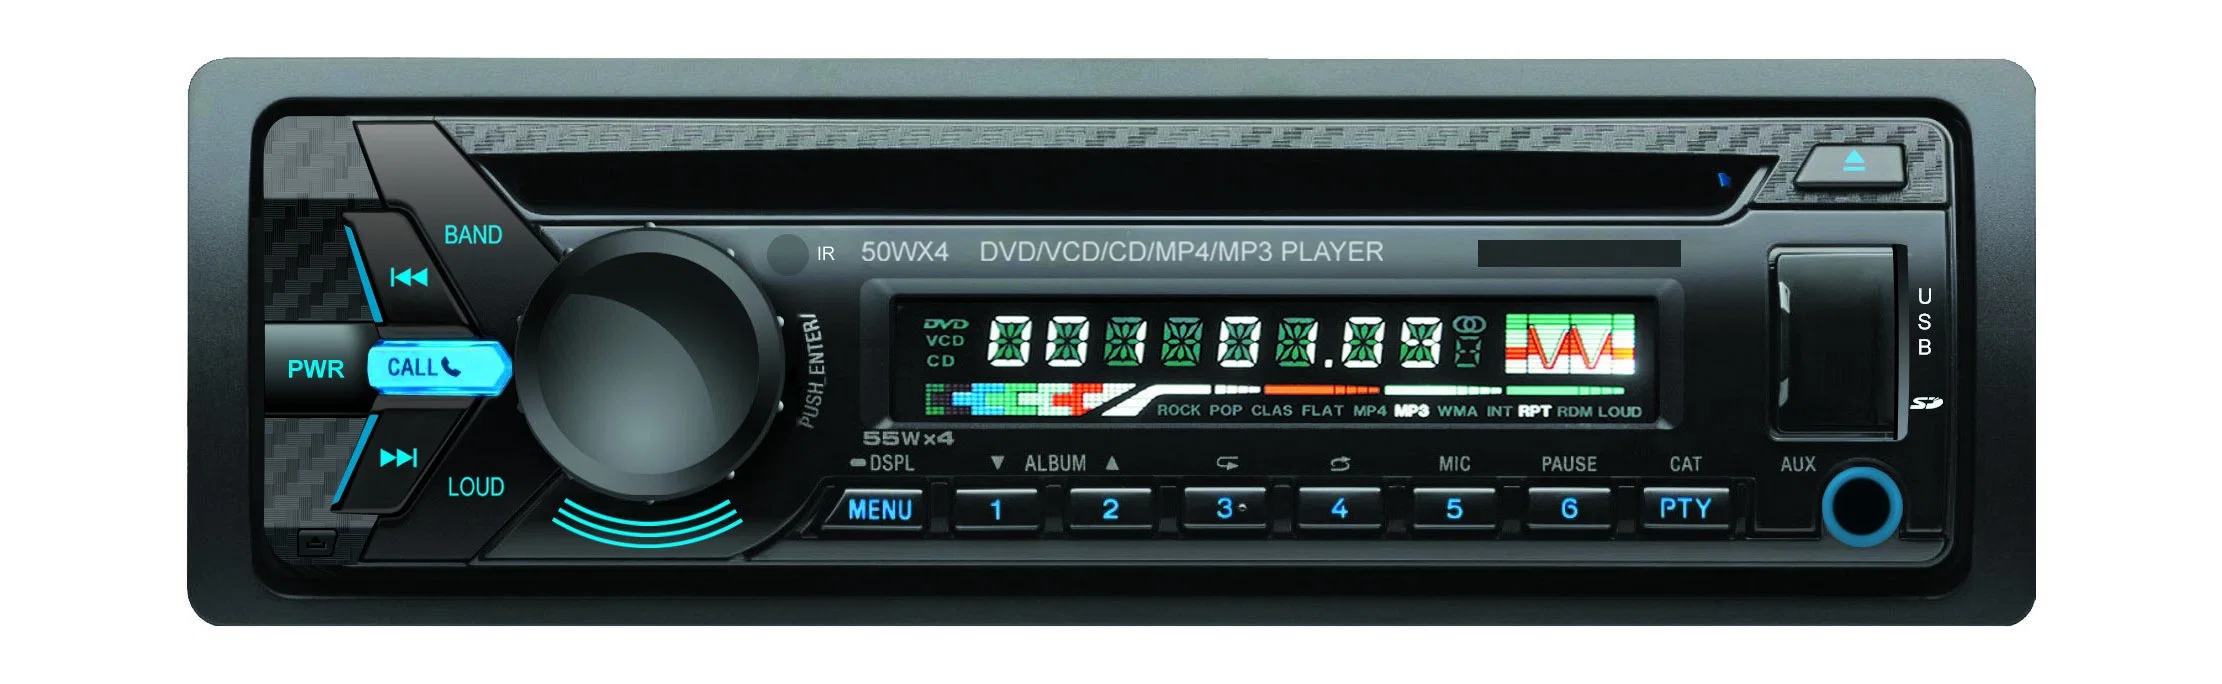 Multimedia 1 DIN Universal Digital coche reproductor de DVD